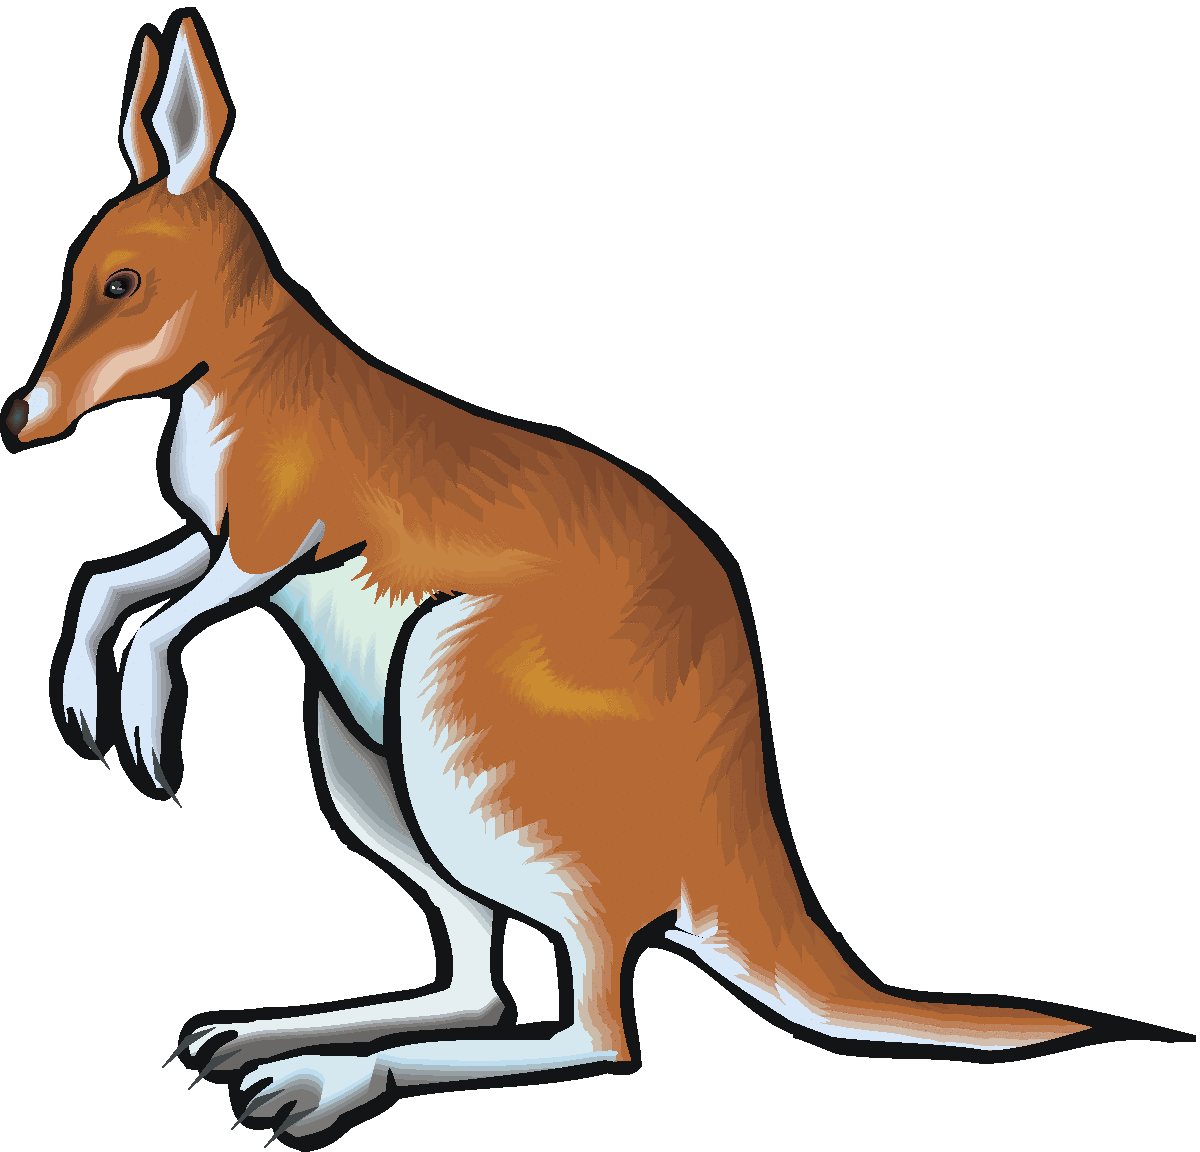 kangaroo clipart australia - photo #24